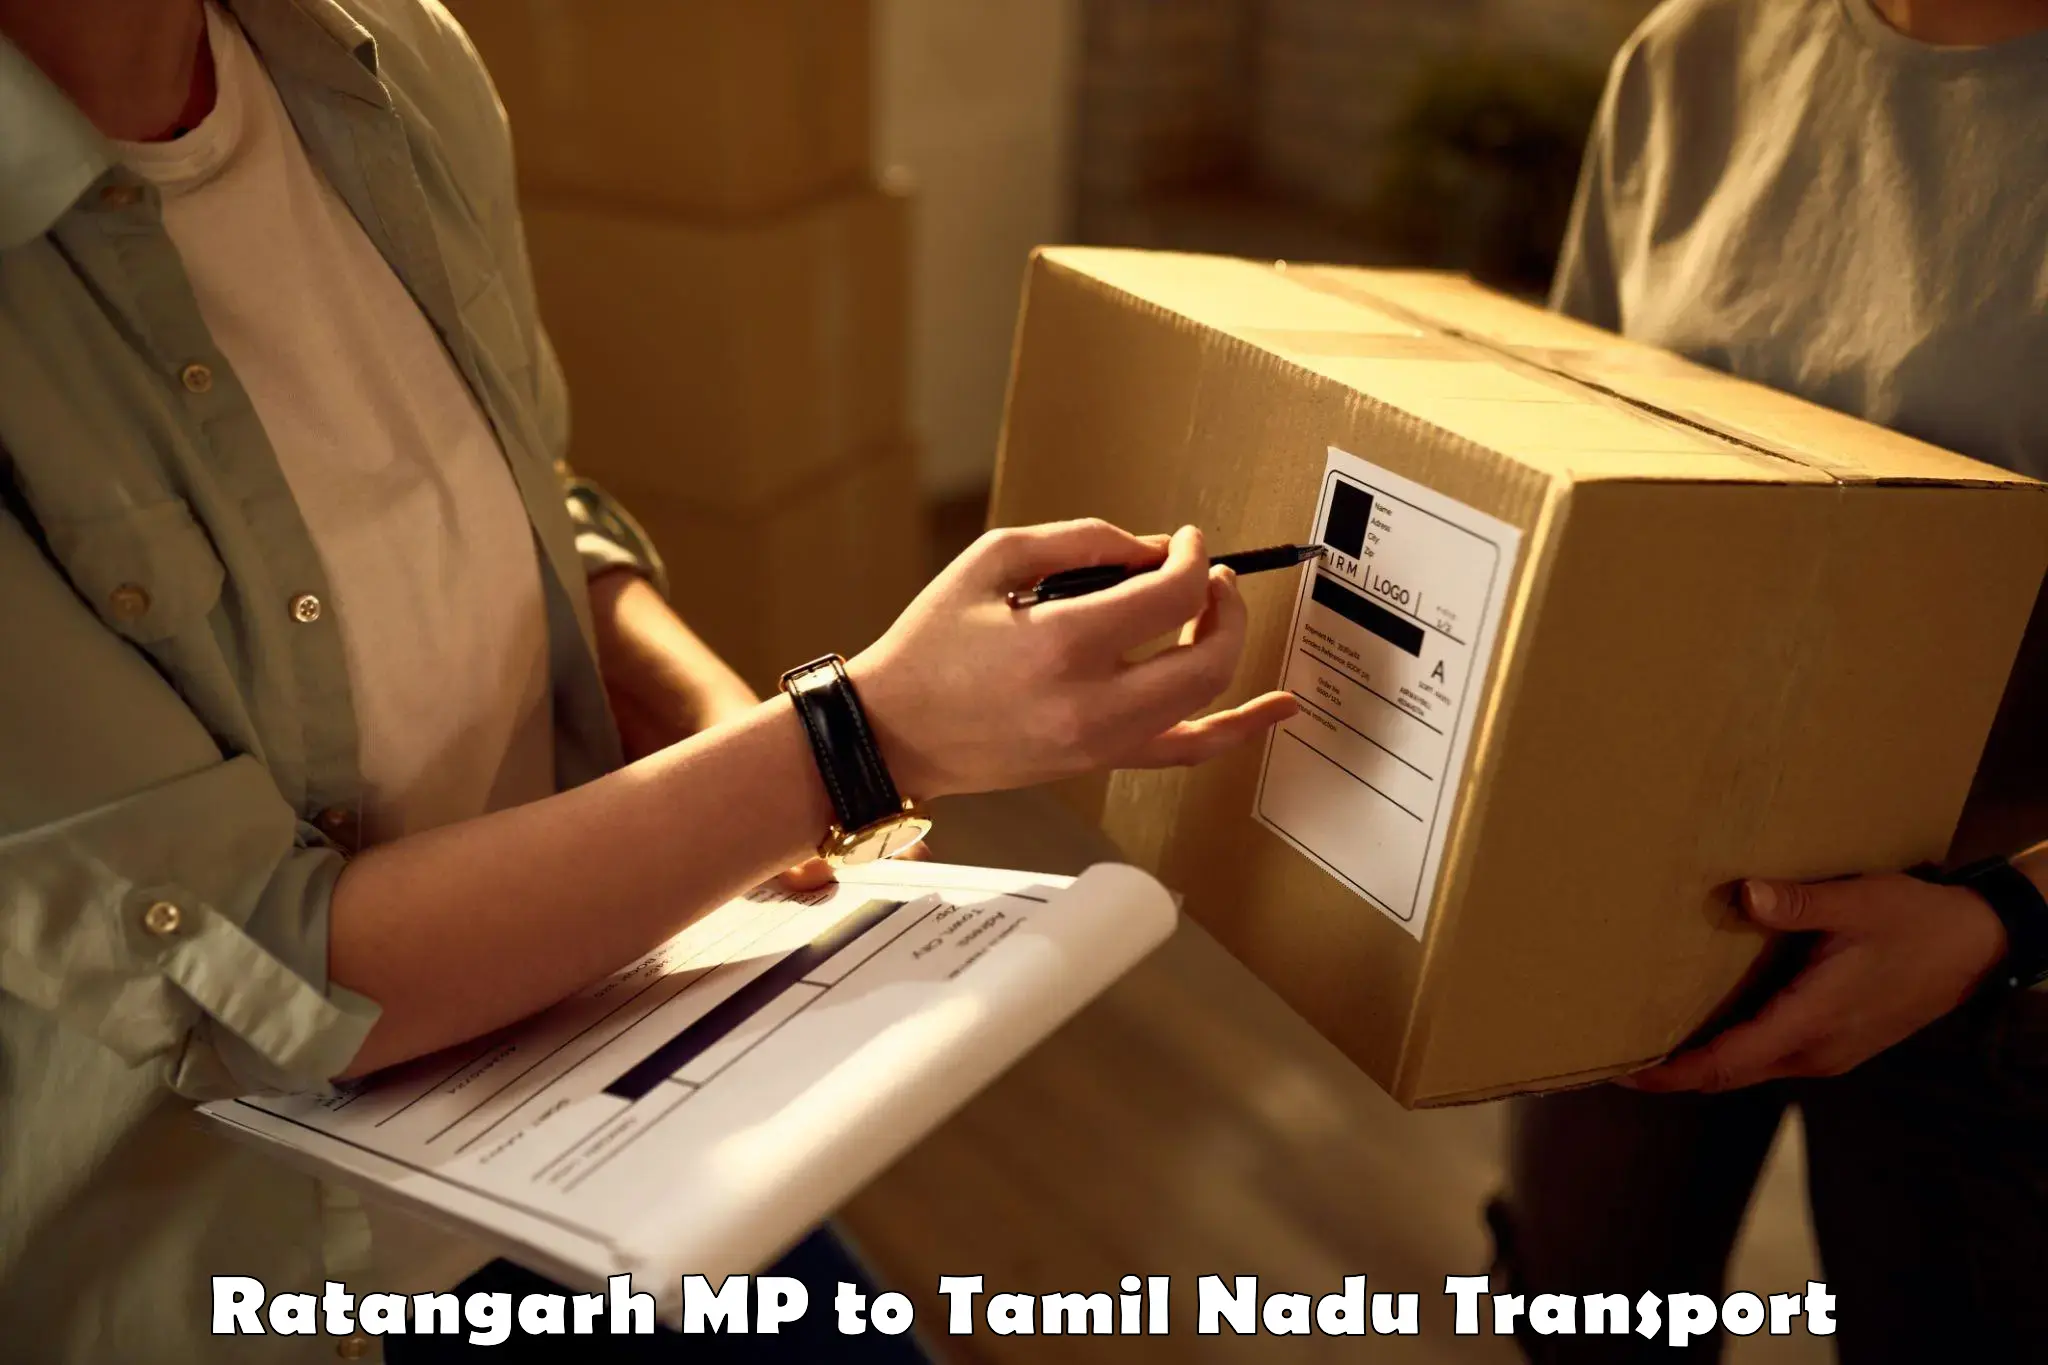 Shipping services Ratangarh MP to Thanjavur